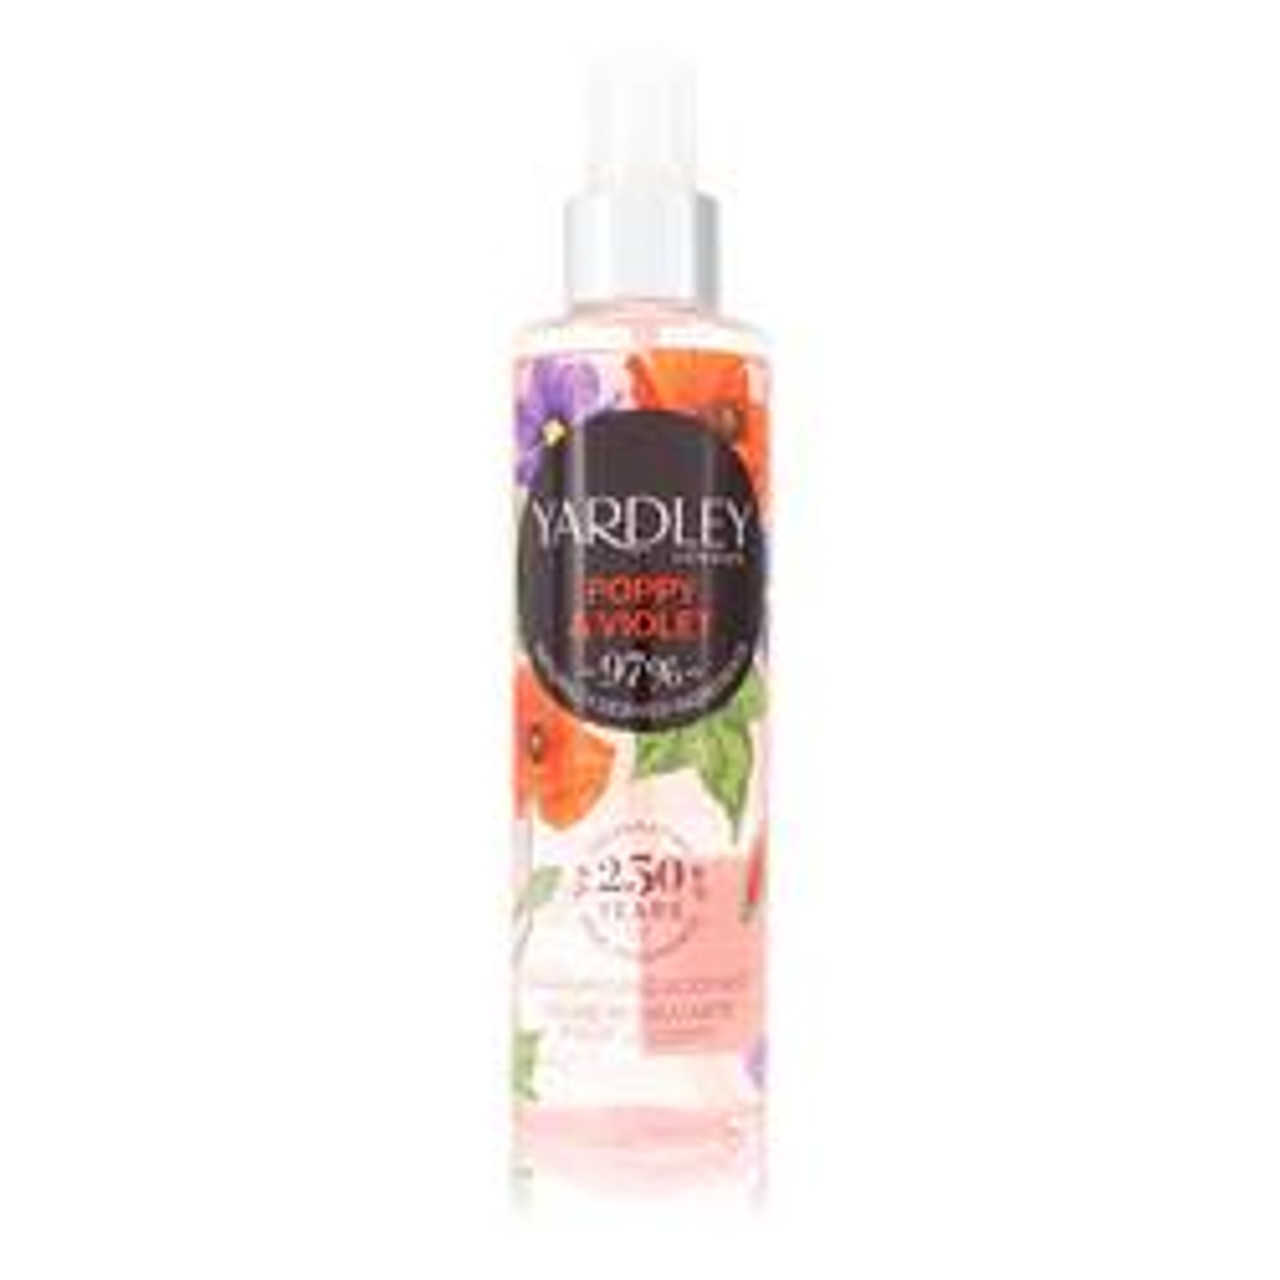 Yardley Poppy & Violet Perfume By Yardley London Body Mist 6.8 oz for Women - [From 39.00 - Choose pk Qty ] - *Ships from Miami